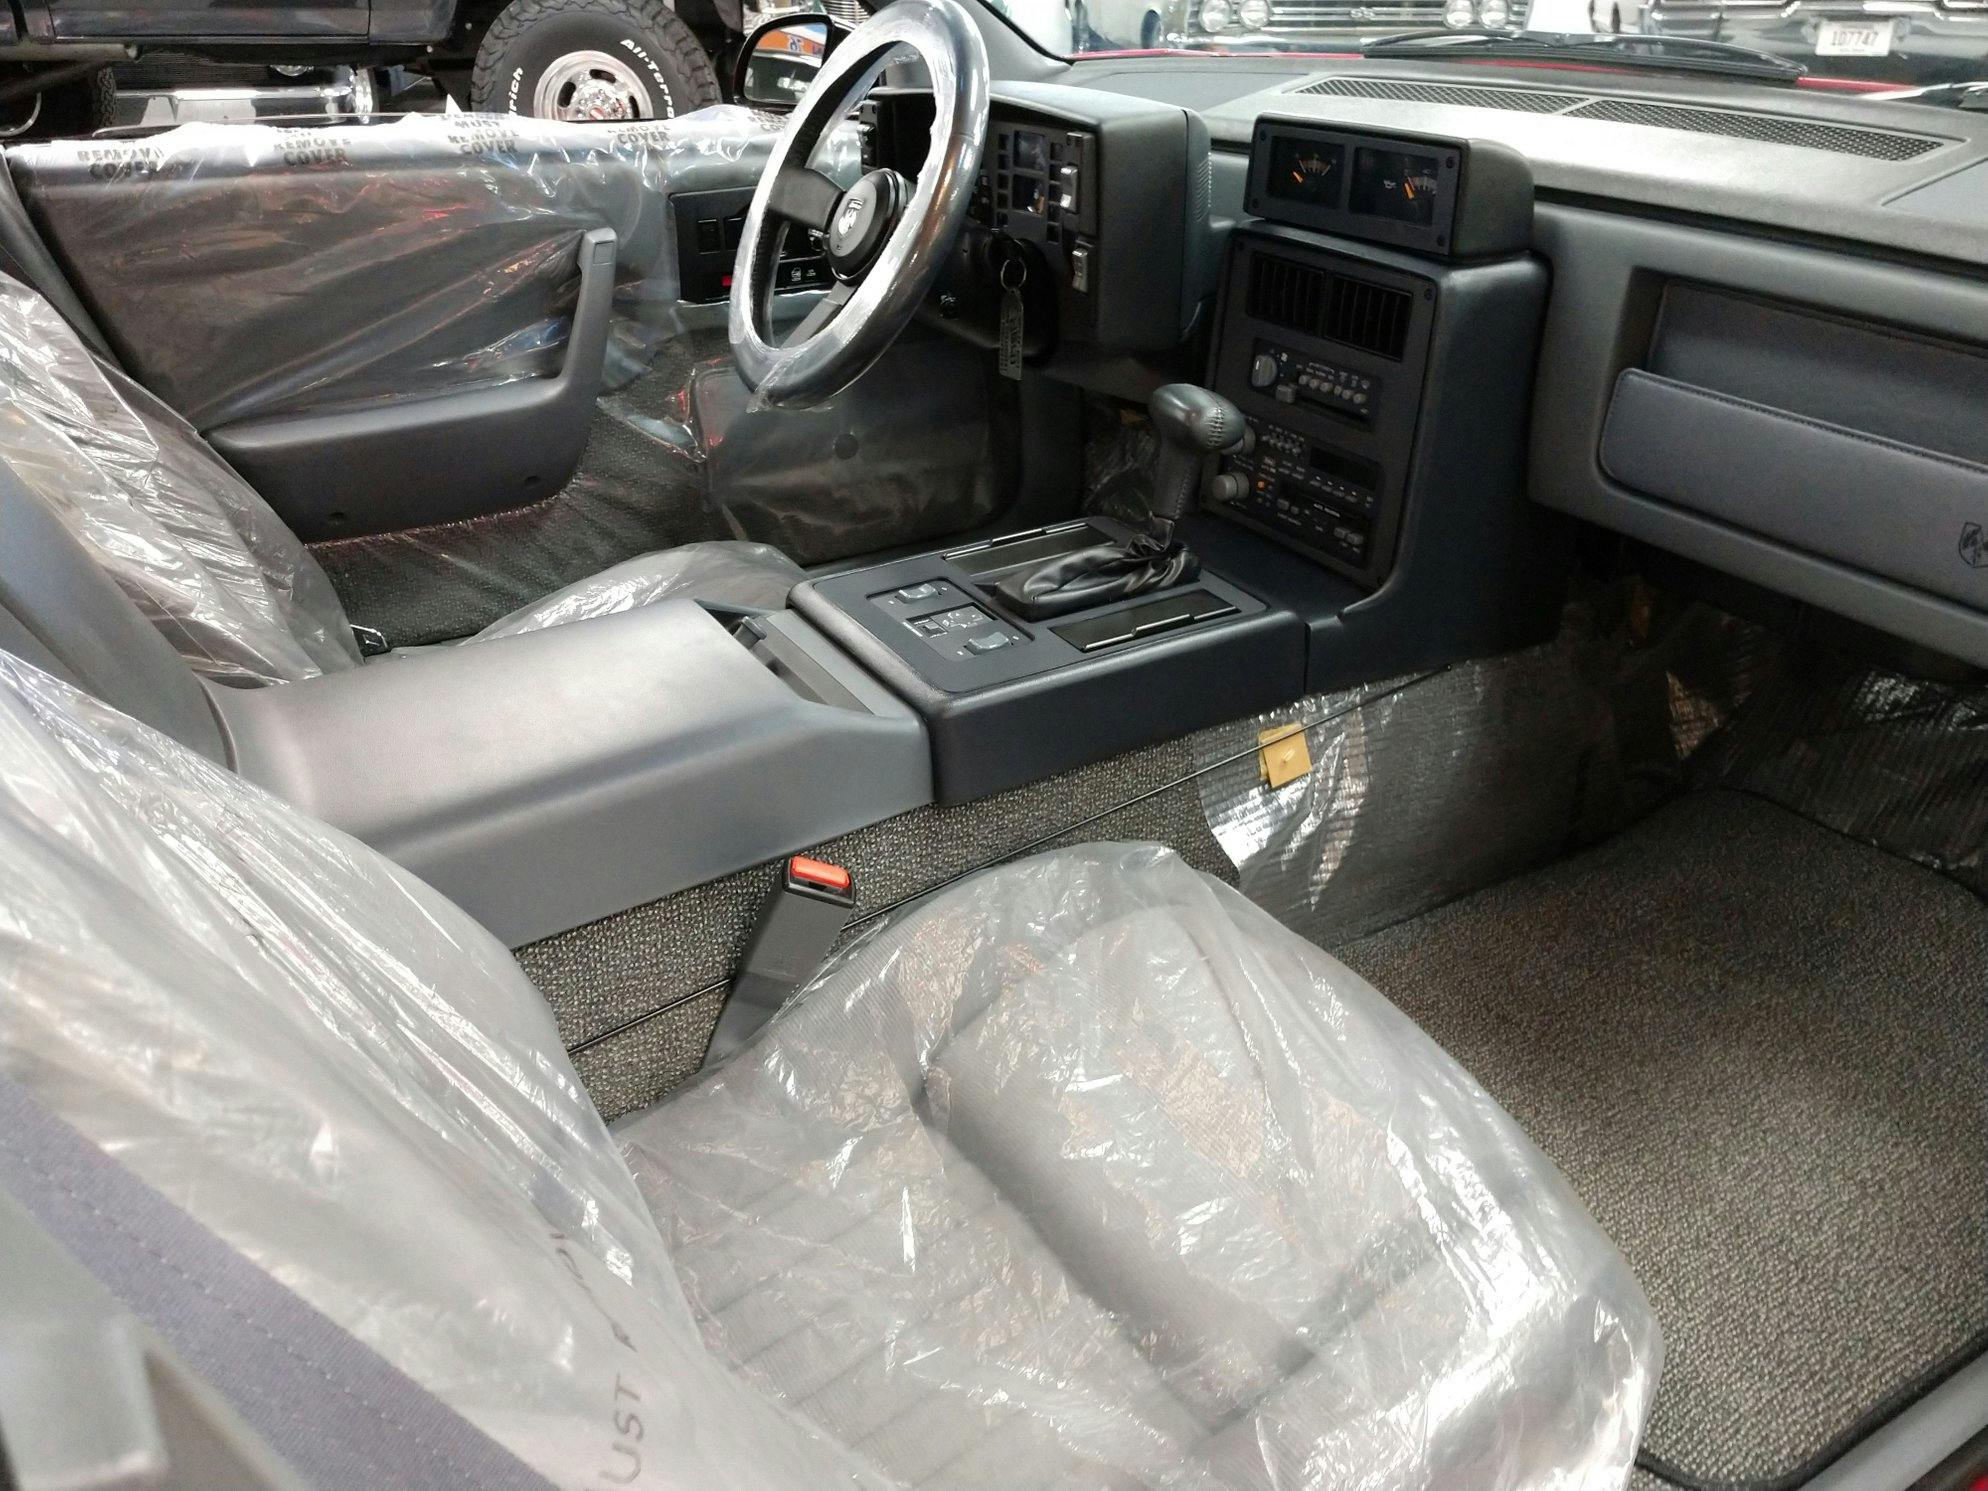 1988 pontiac fiero gt front interior